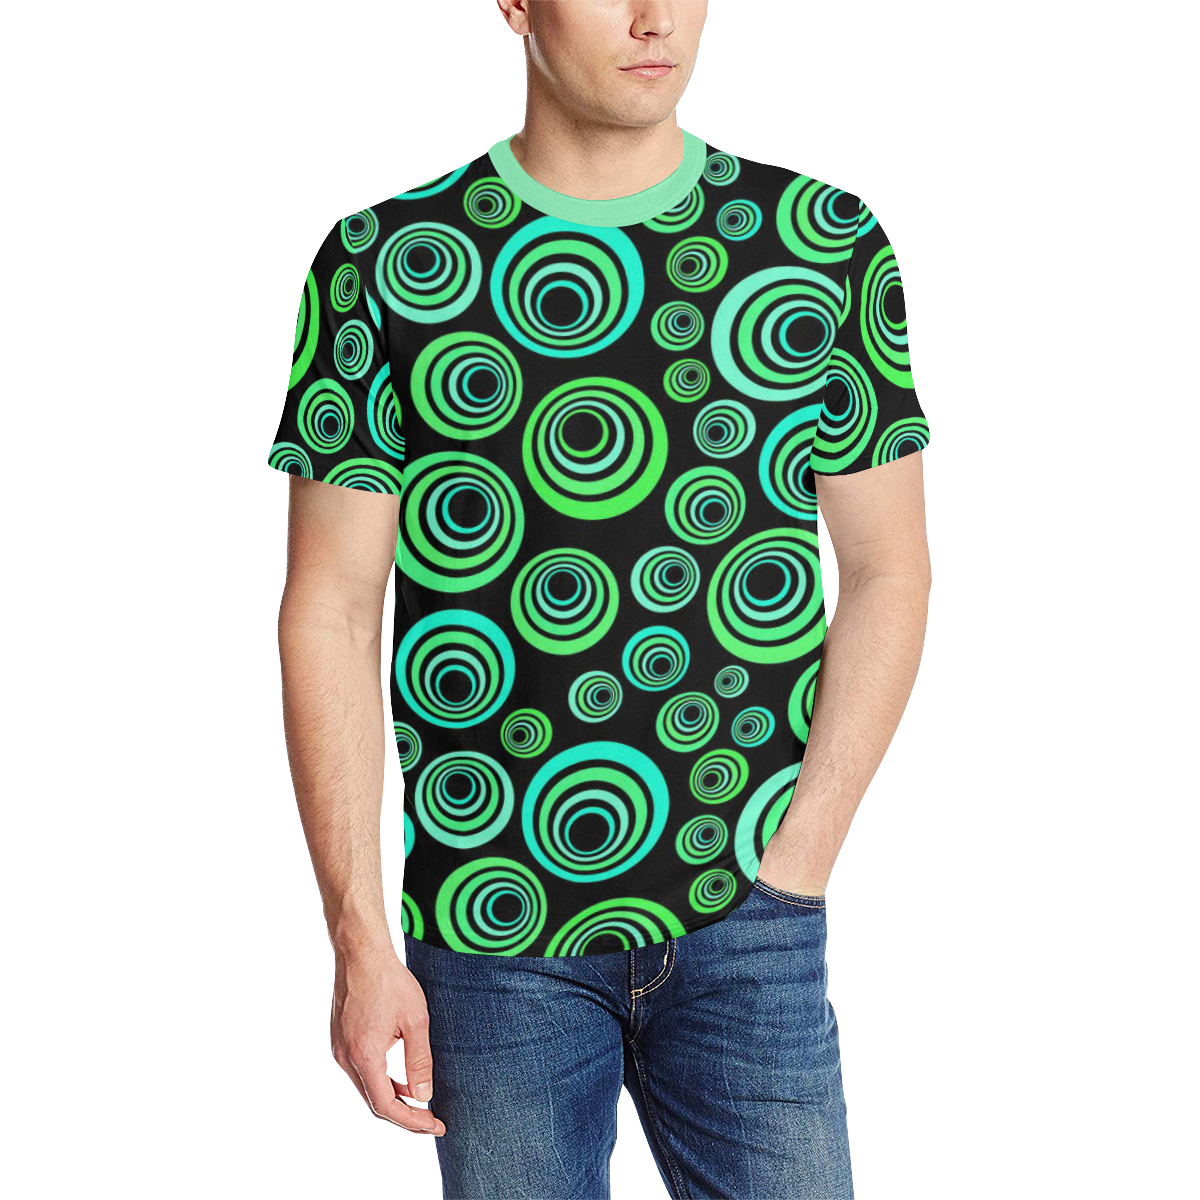 Crazy Fun Neon Blue & Green retro pattern Men's All Over Print T-Shirt (Solid Color Neck) (Model T63)